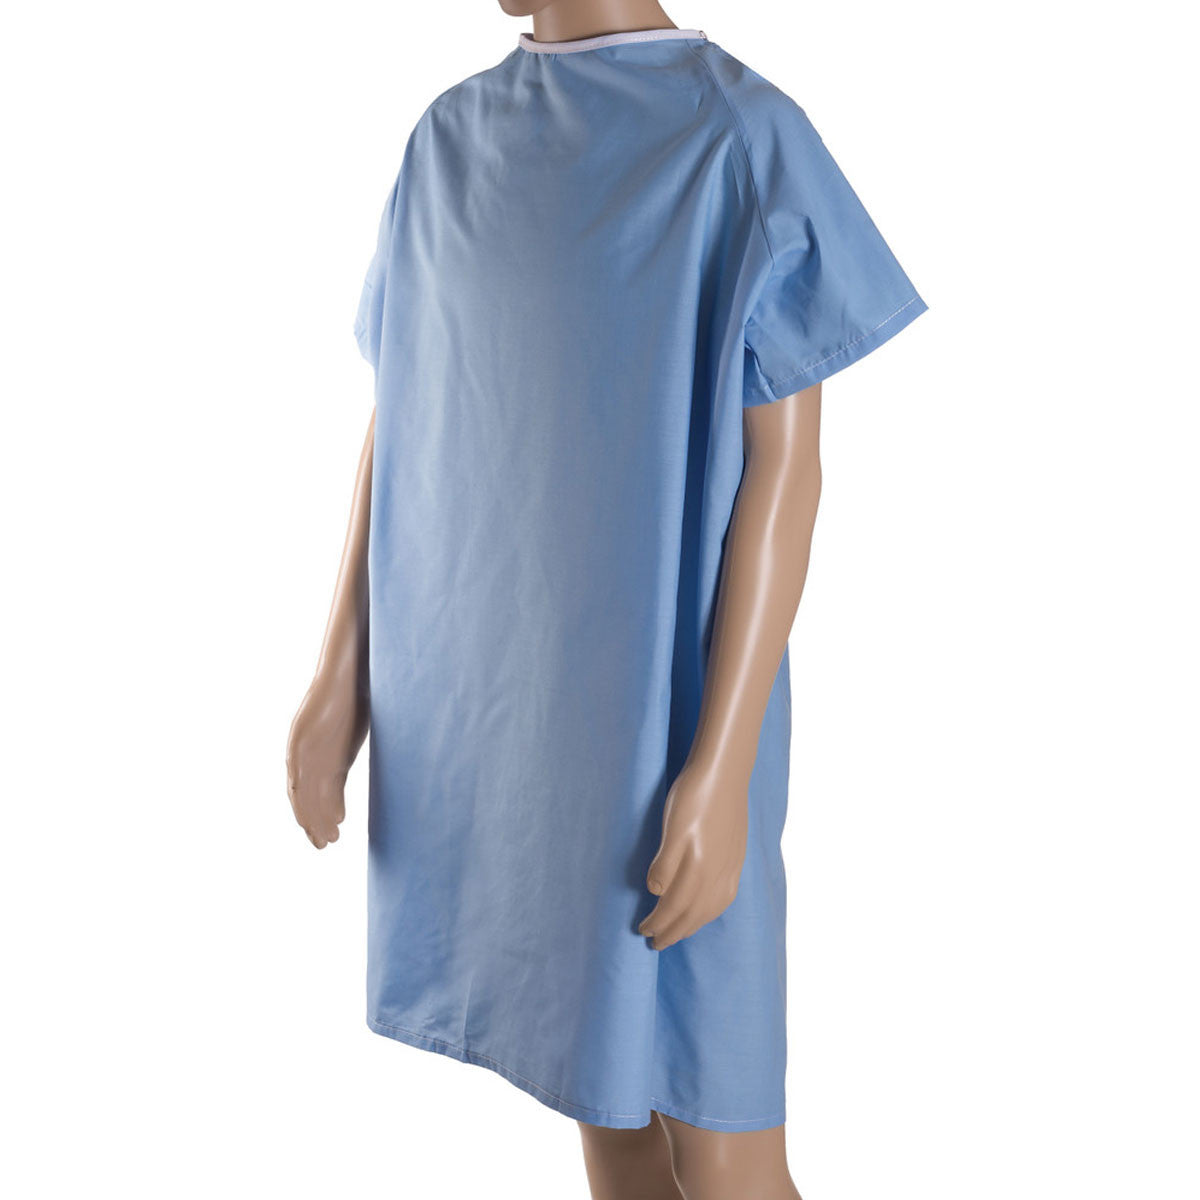 Reusable Cloth Patient | Binson's Medical Equipment & Supplies